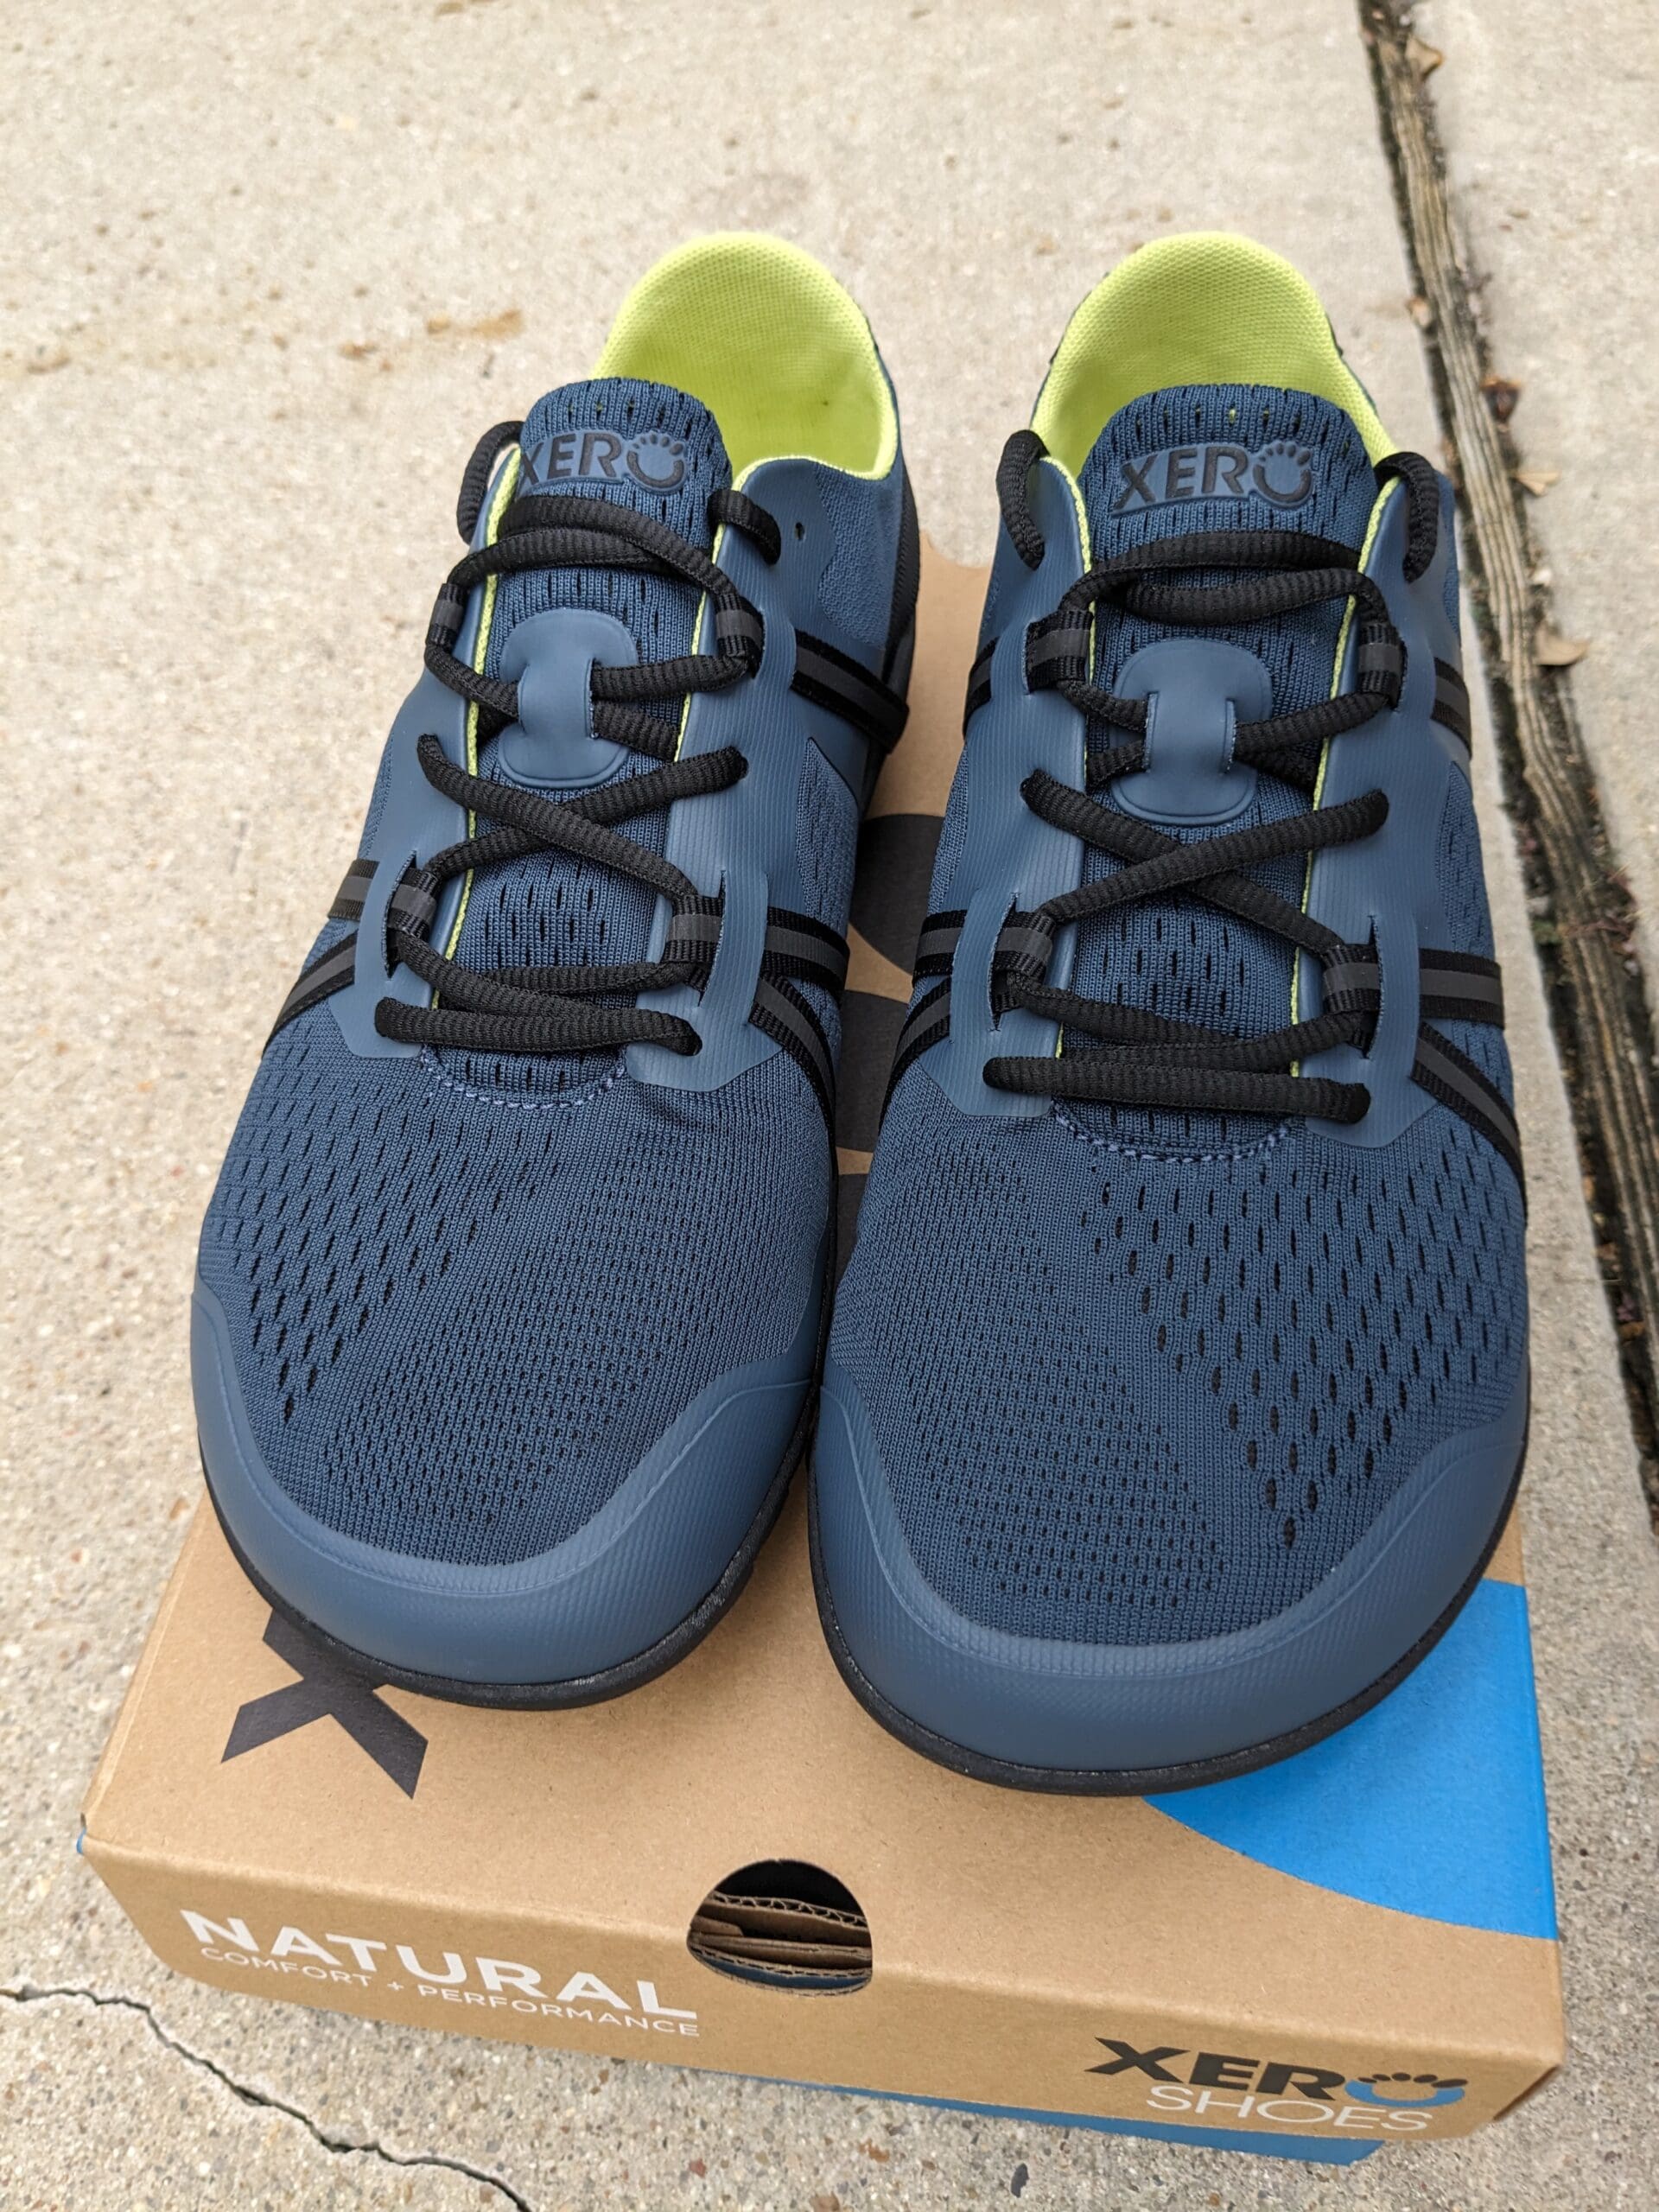 xero shoes speed force ii toe boxes